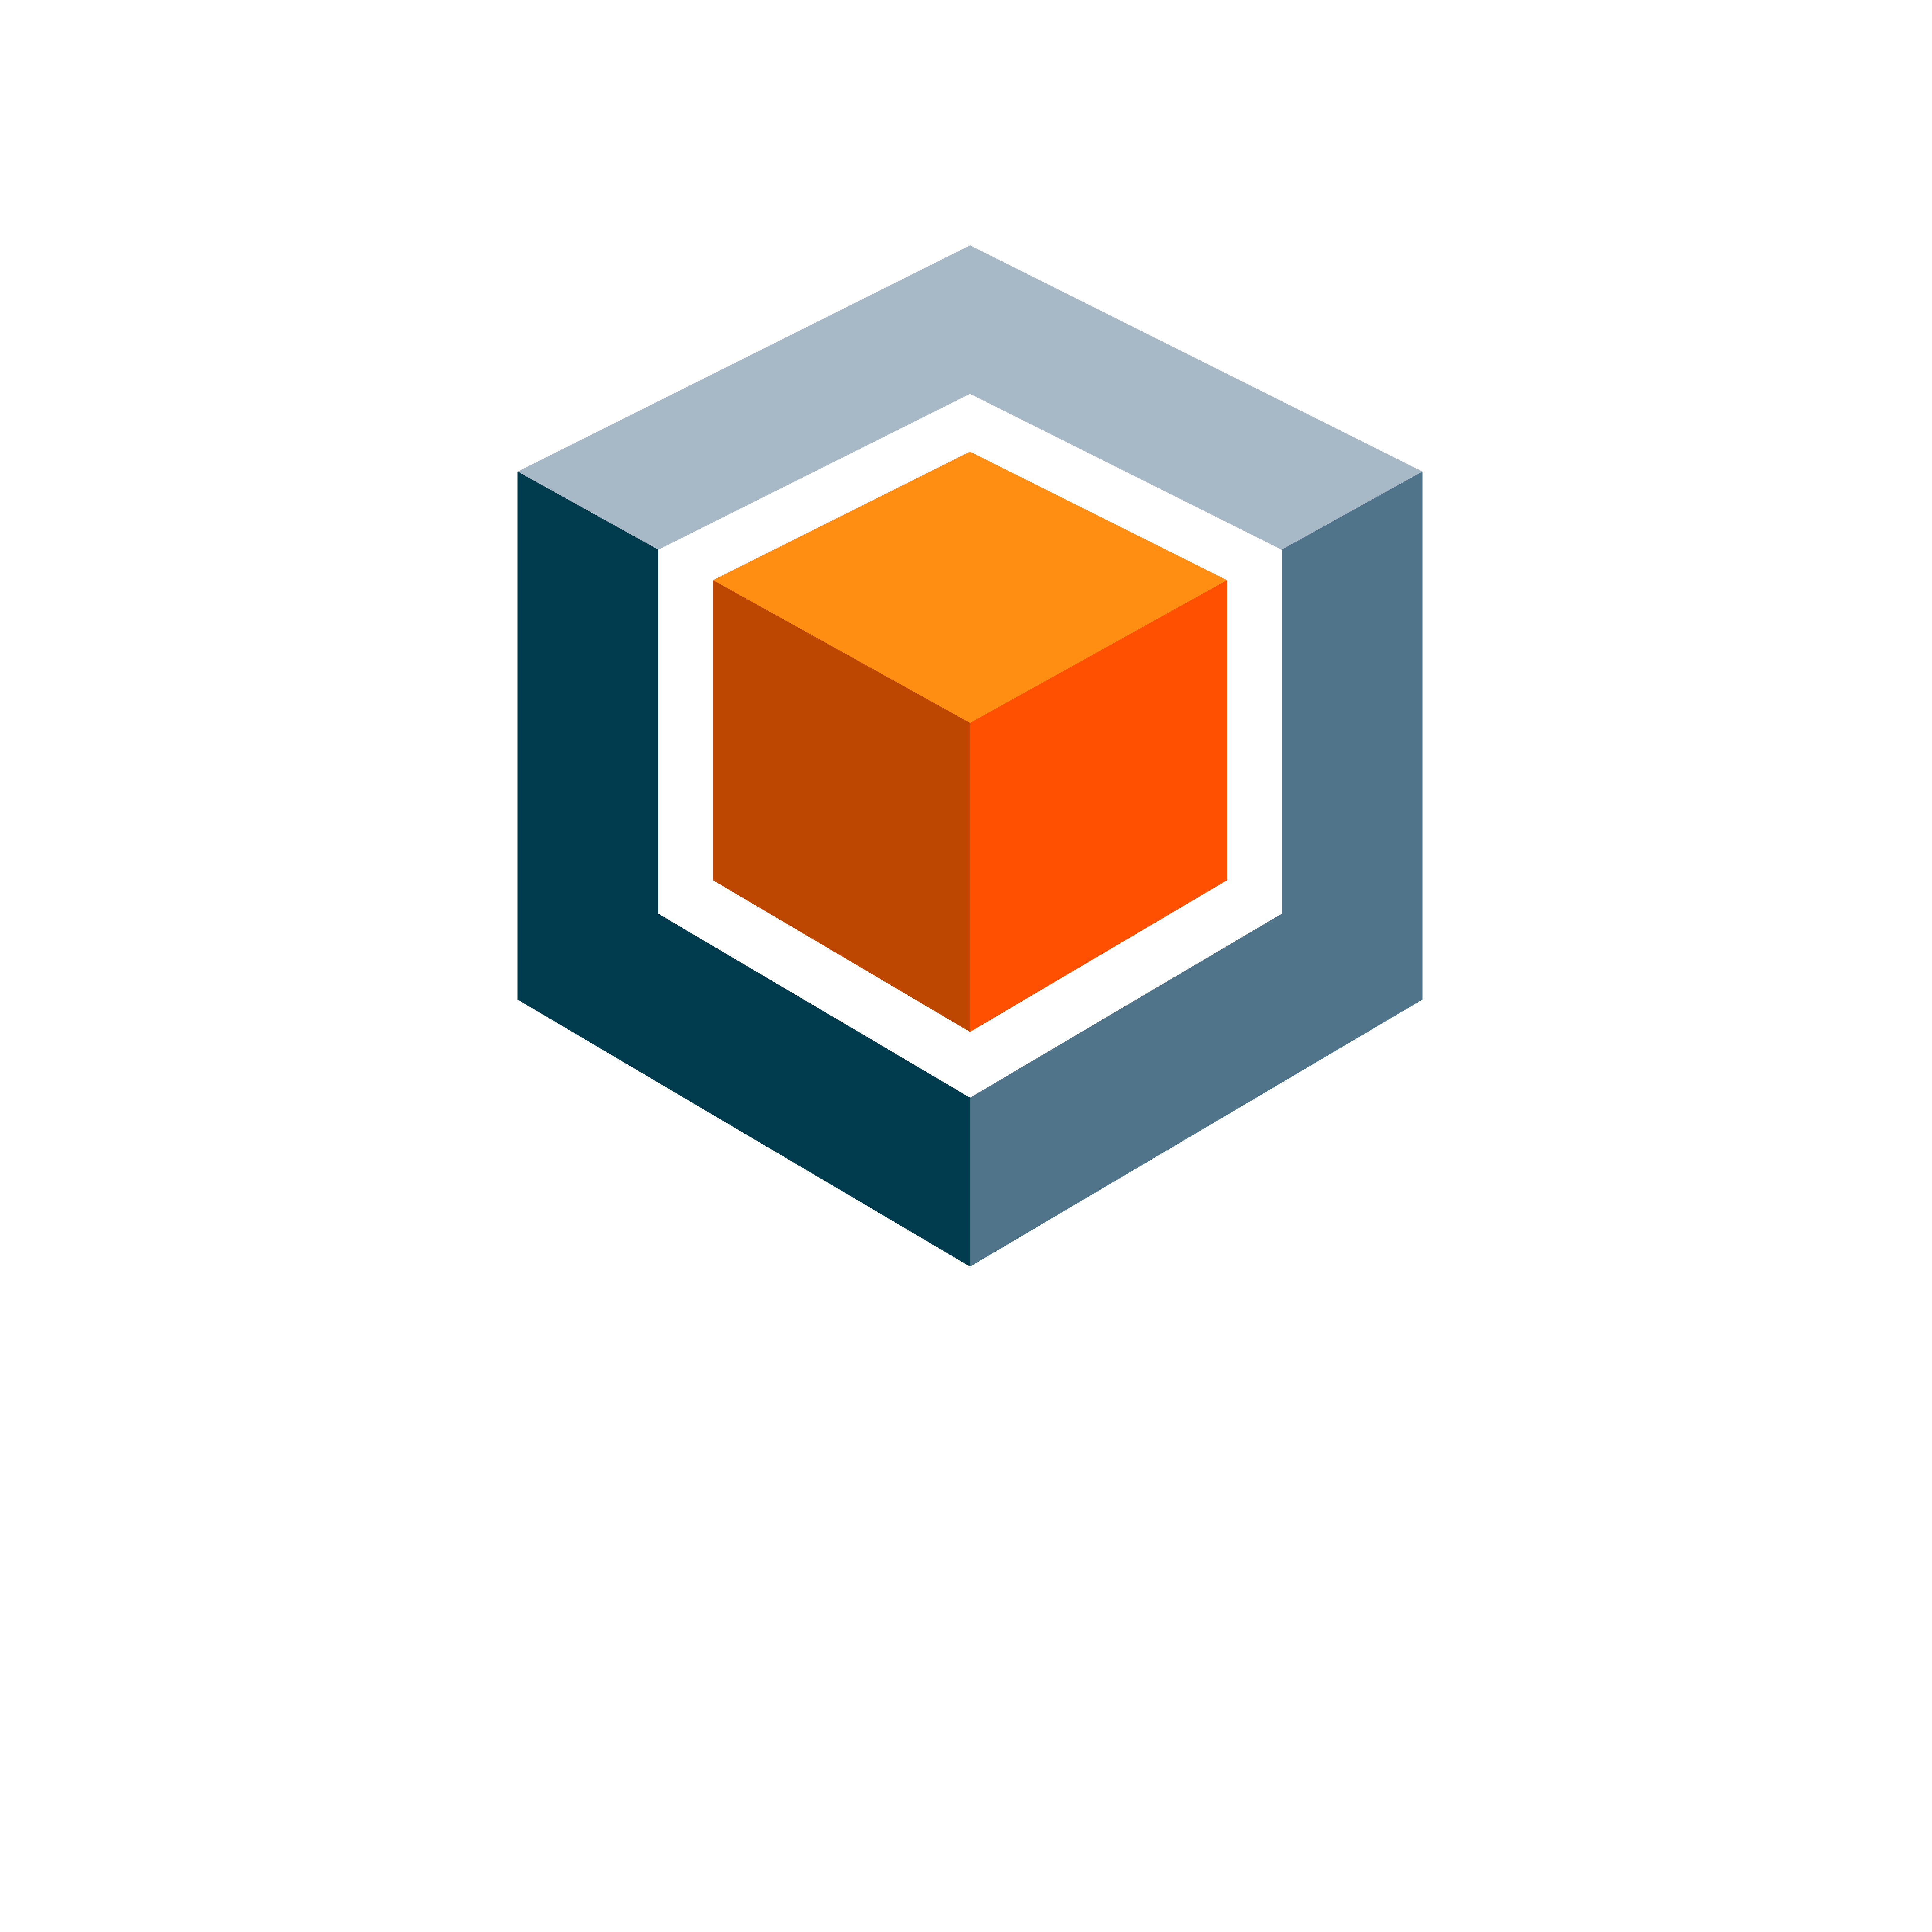 Tetrane